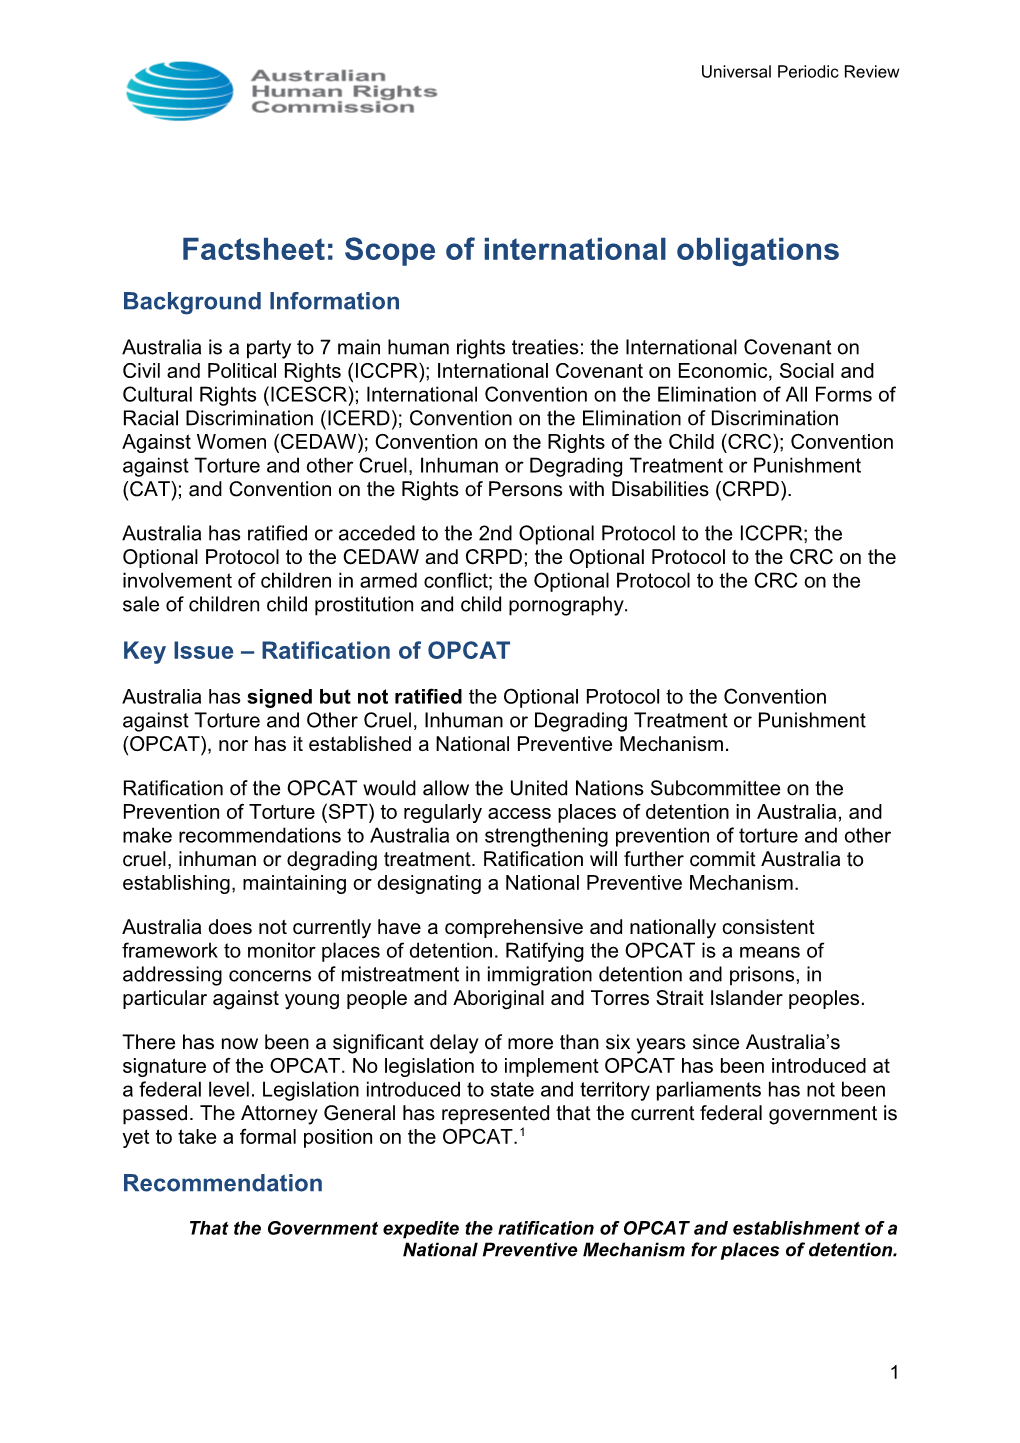 Factsheet: Scope of International Obligations